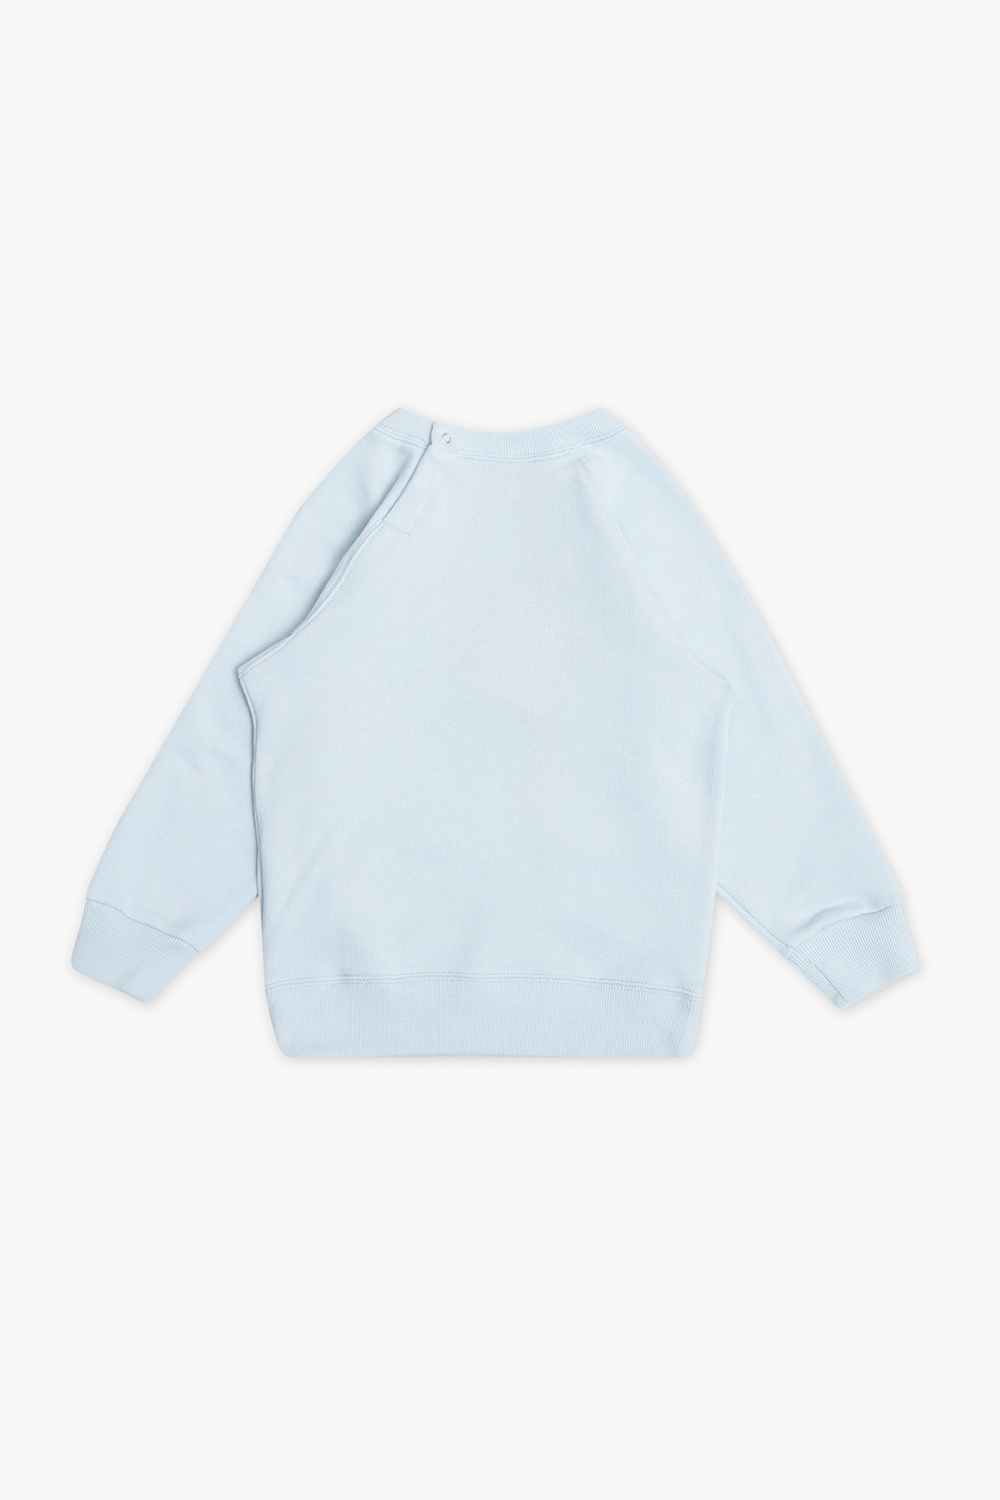 gucci enfiler Kids Printed sweatshirt